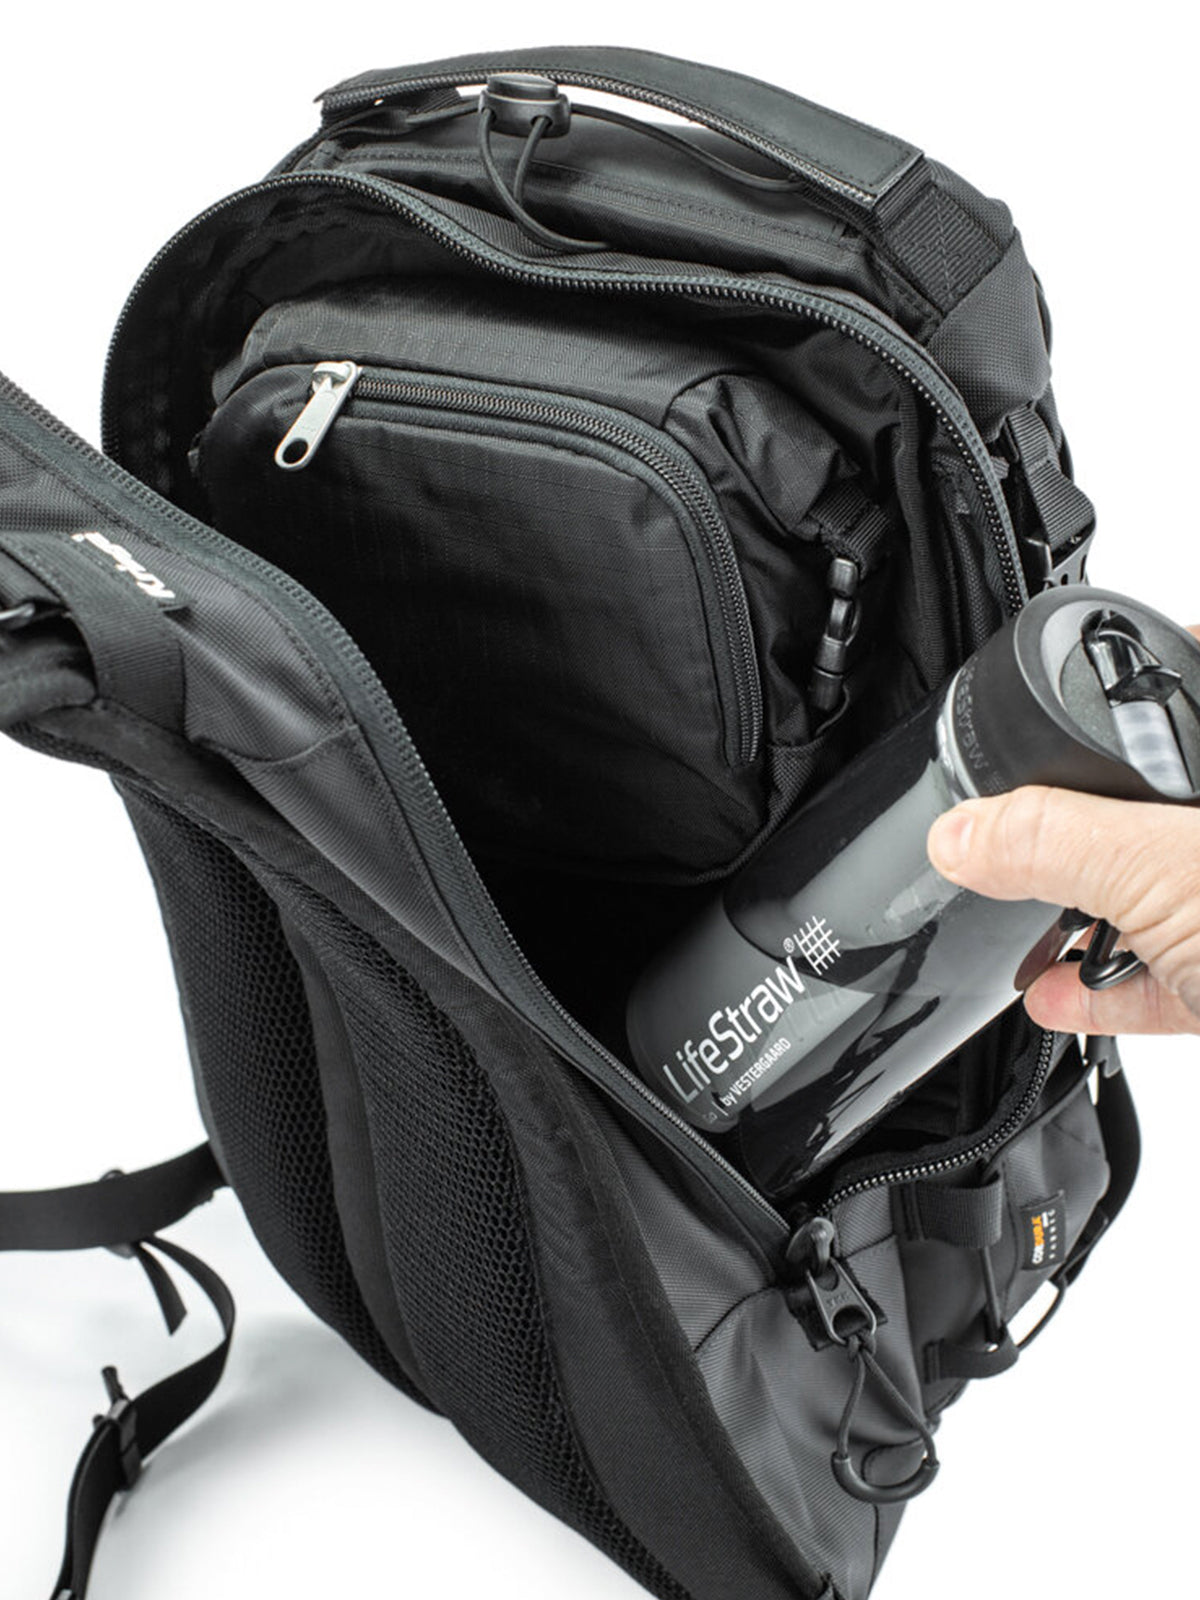 Kriega Trail18 Adventure Backpack rear storage pocket